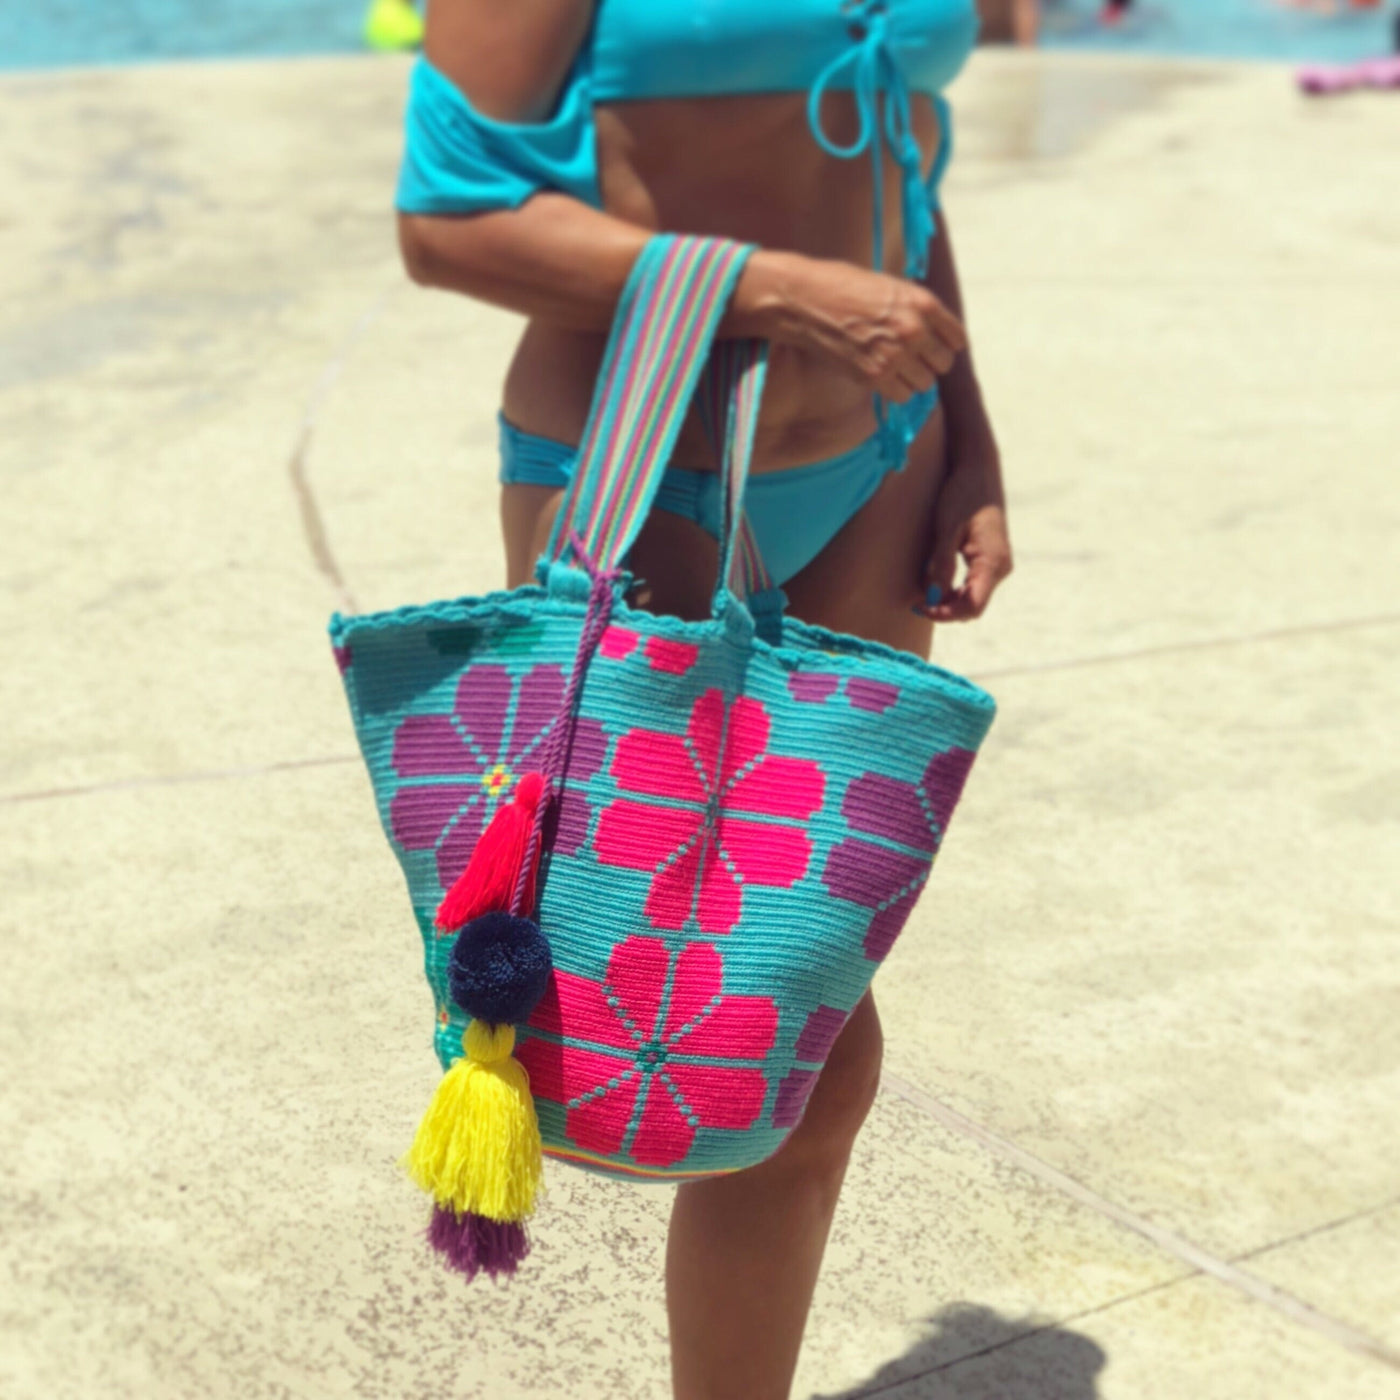 Teal-Pink Summer Tote Bag | Beach Tote Bag for summer | Crochet Tote Bag | Colorful 4u